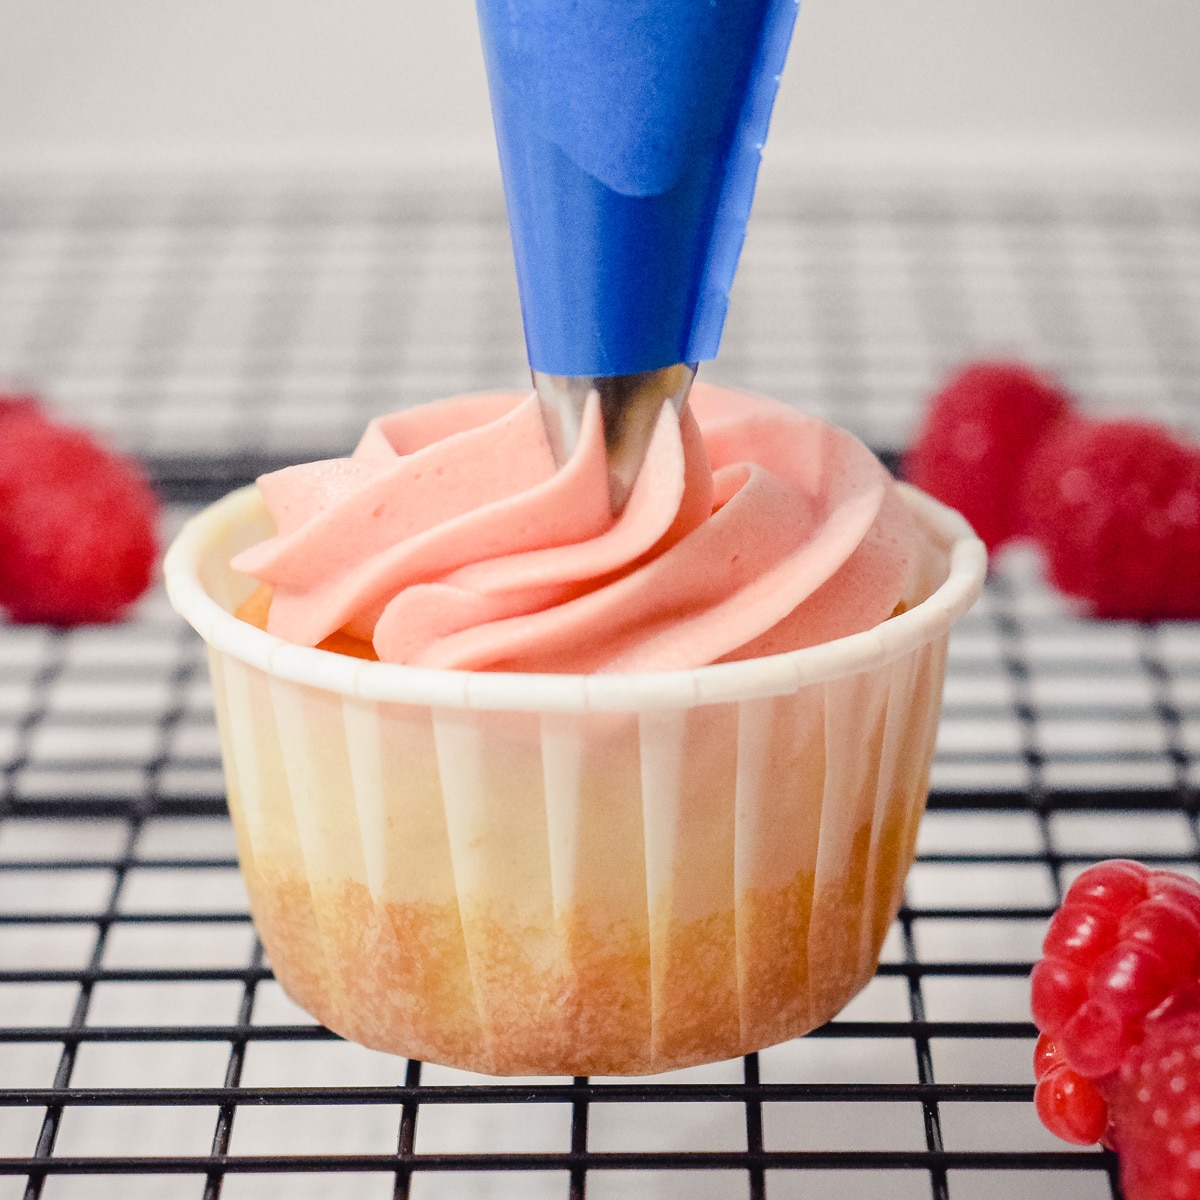 homemade raspberry buttercream piped onto a cupcake with fresh raspberries around it